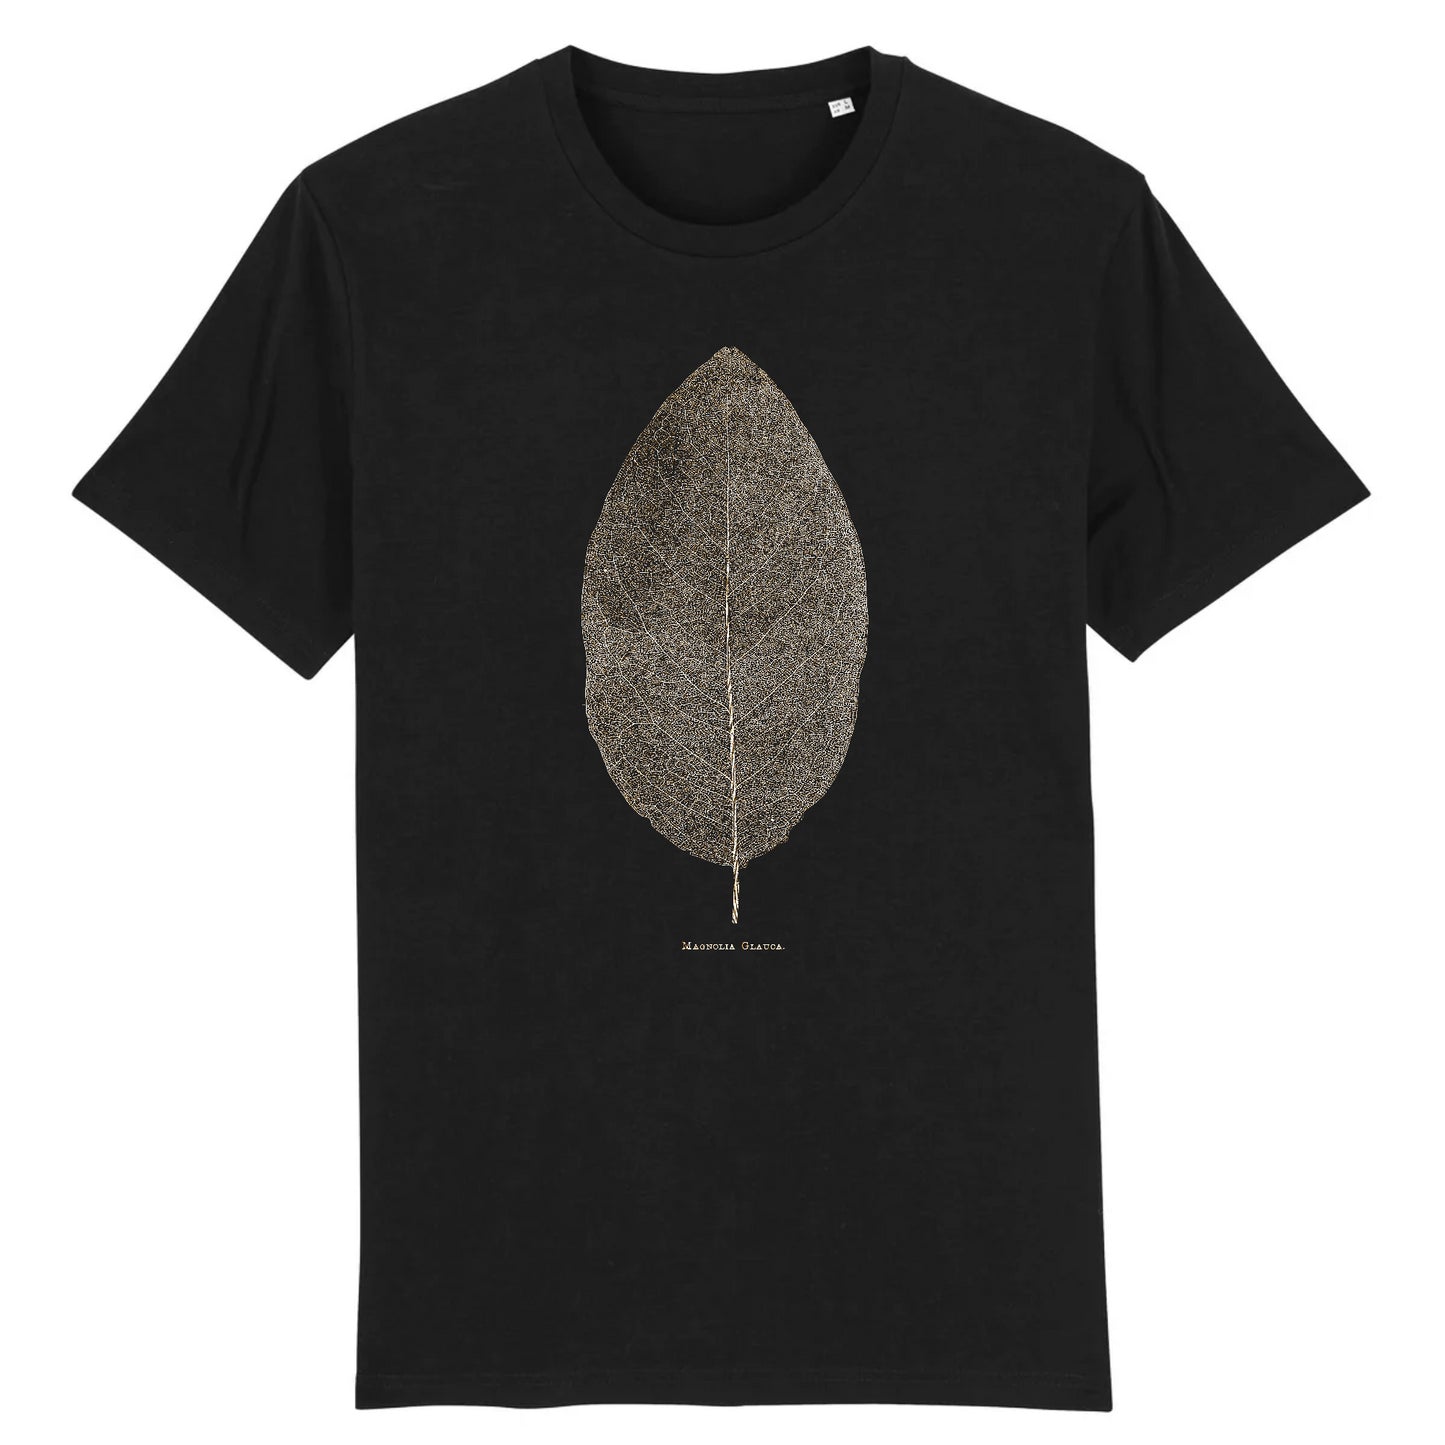 El ramo fantasma de August Wilhelm c. 1836 - Camiseta de algodón orgánico